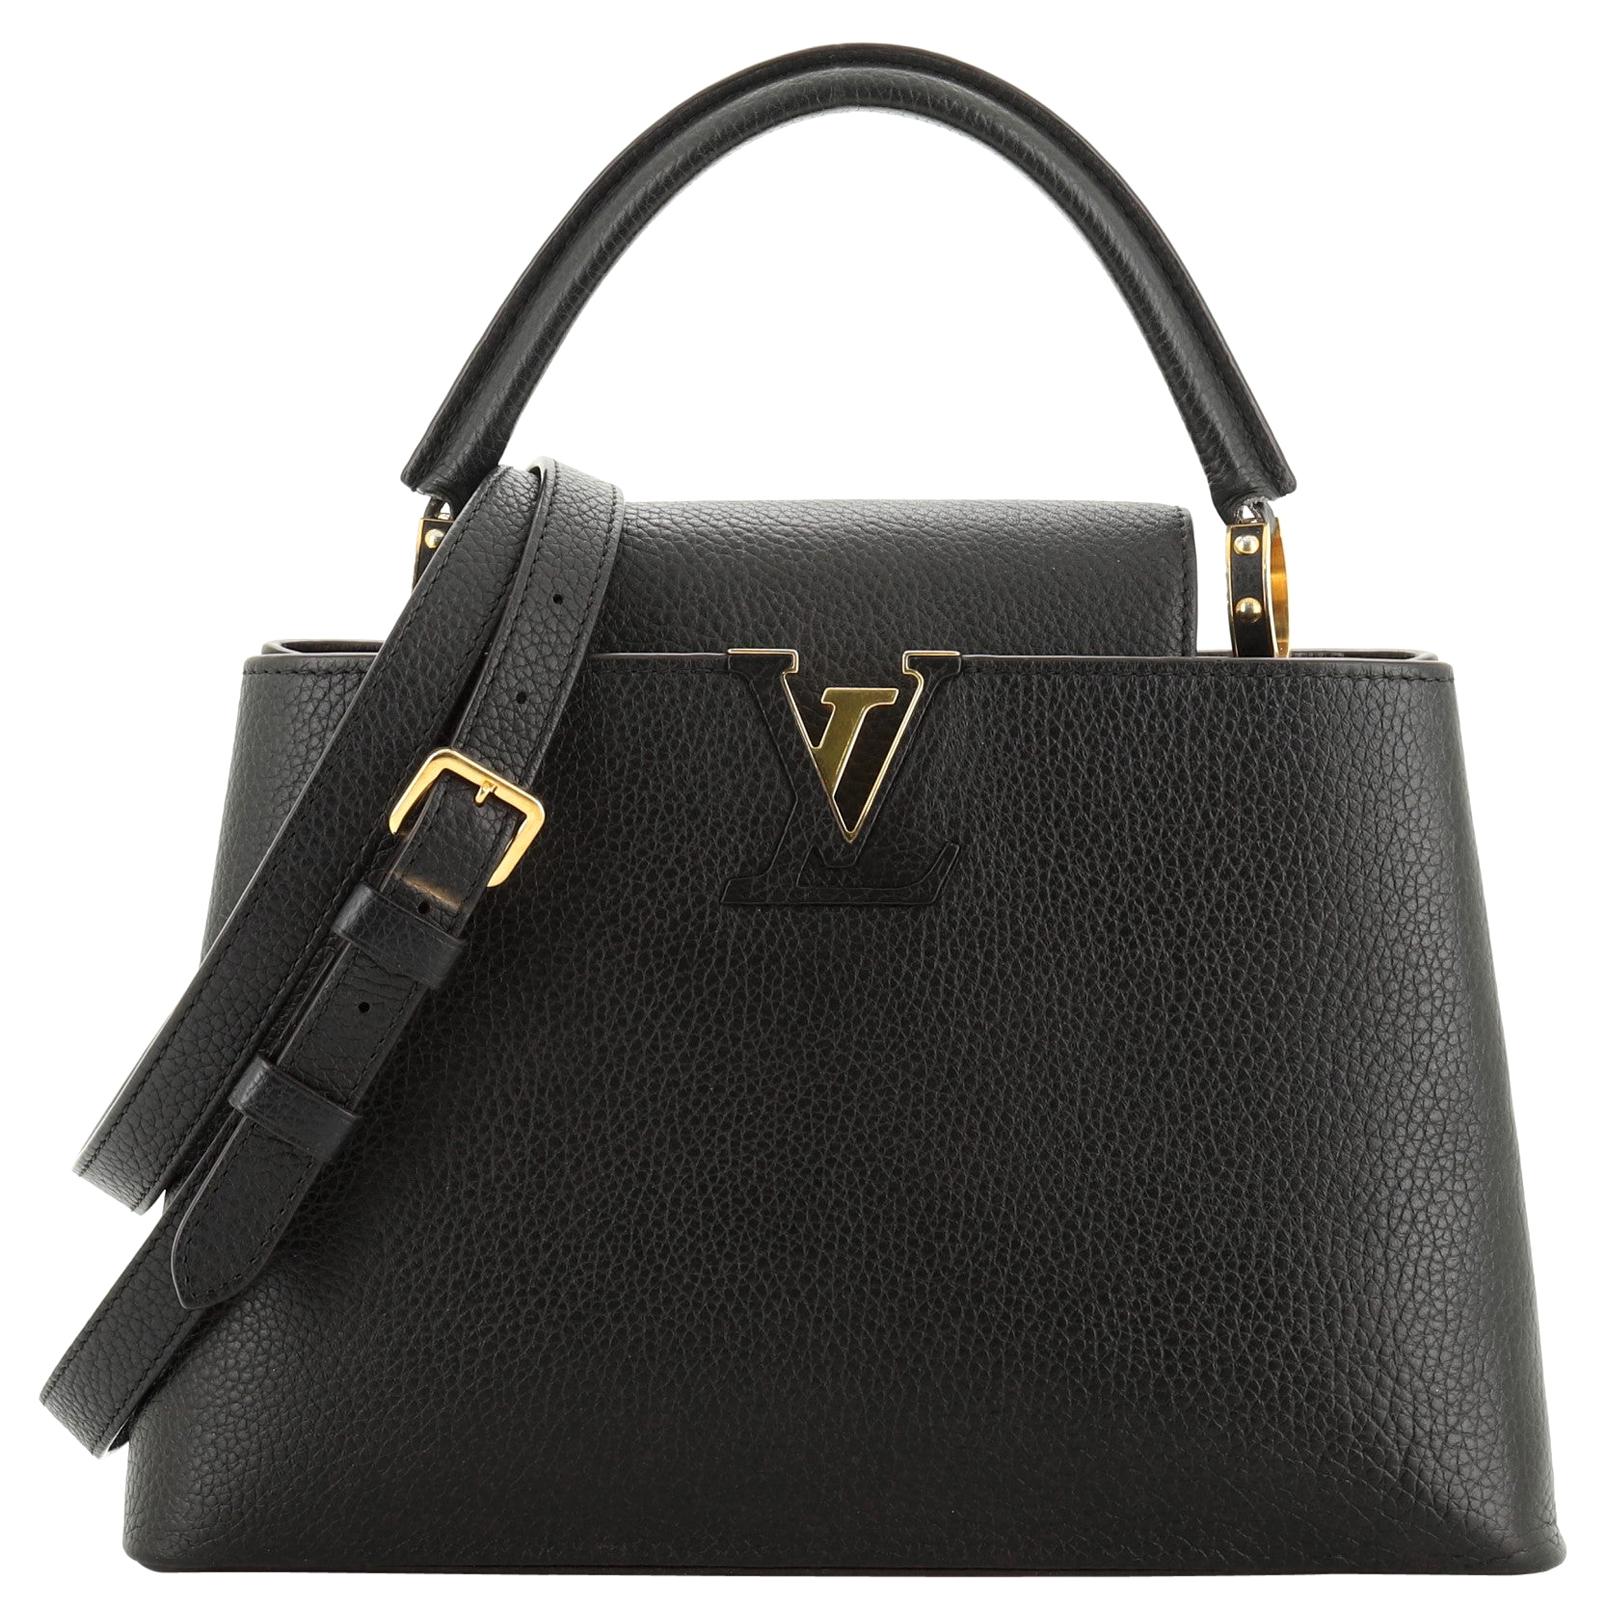 Louis Vuitton Capucines Handbag Leather PM 